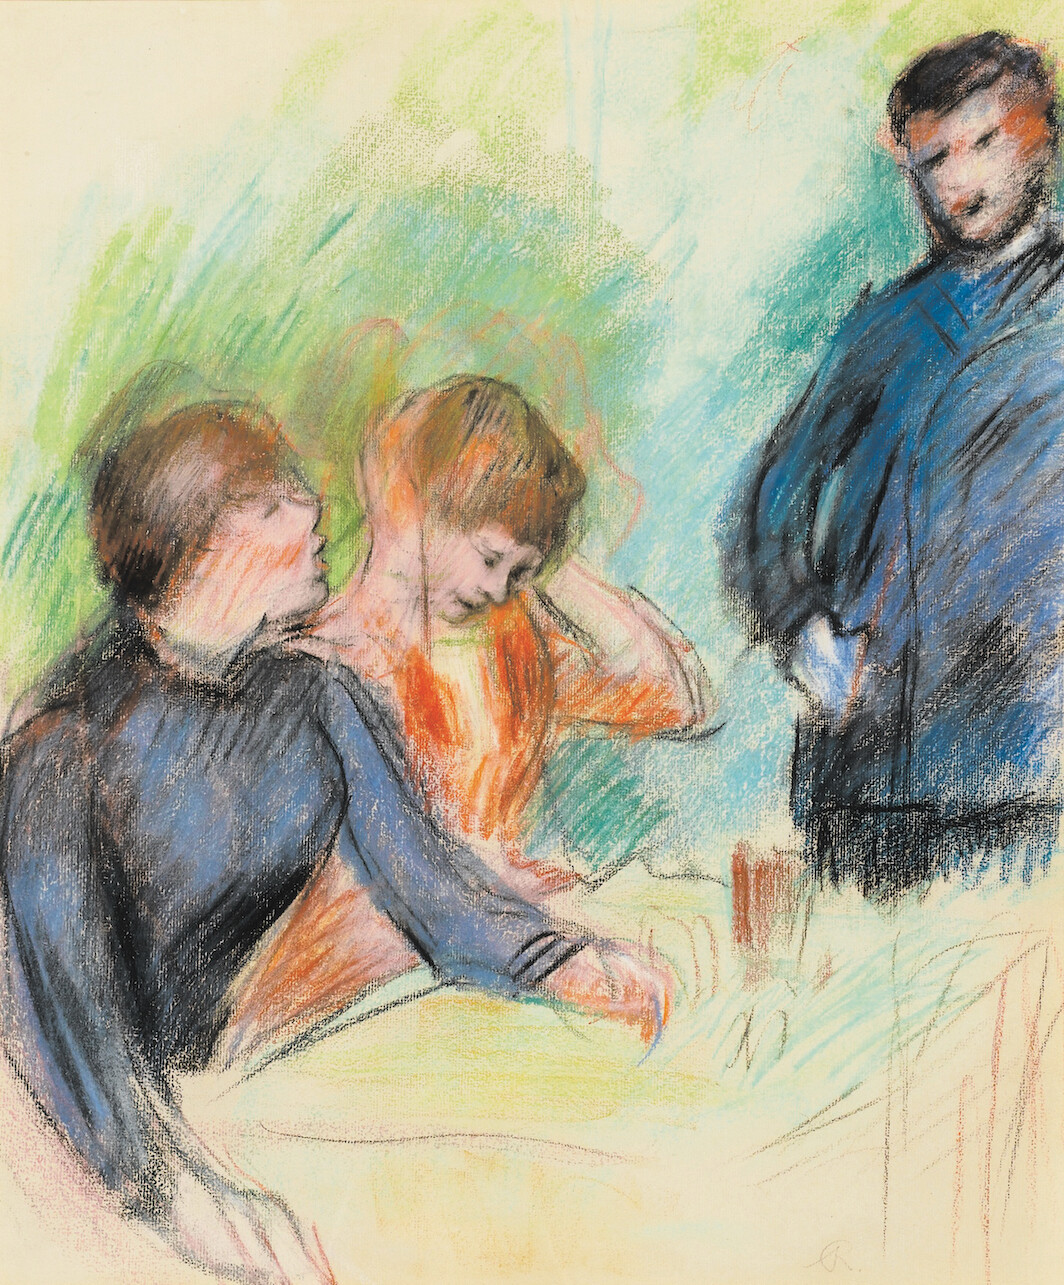 Pierre-Auguste Renoir, La Conversation (The Conversation), ca. 1876, pastel and charcoal on paper, 23 5/8 × 19 1/8". Wikicommons.